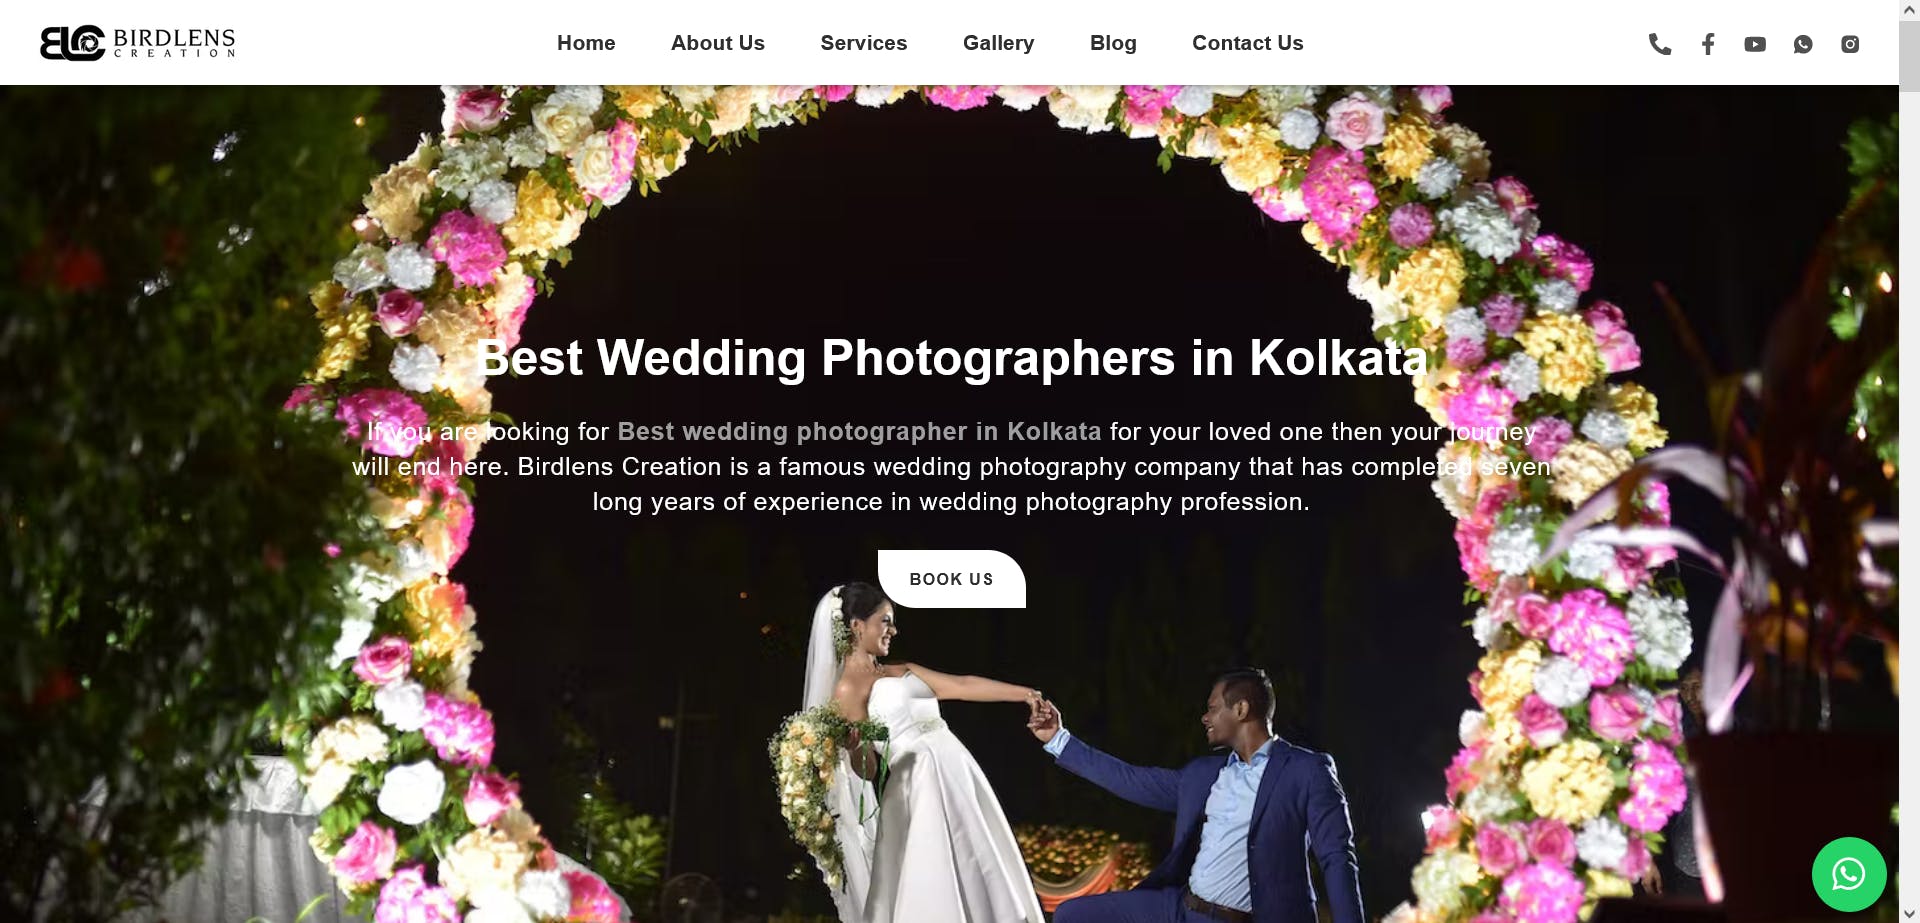 Birdlens Creation Photography - Best Wedding Photographer in Kolkata